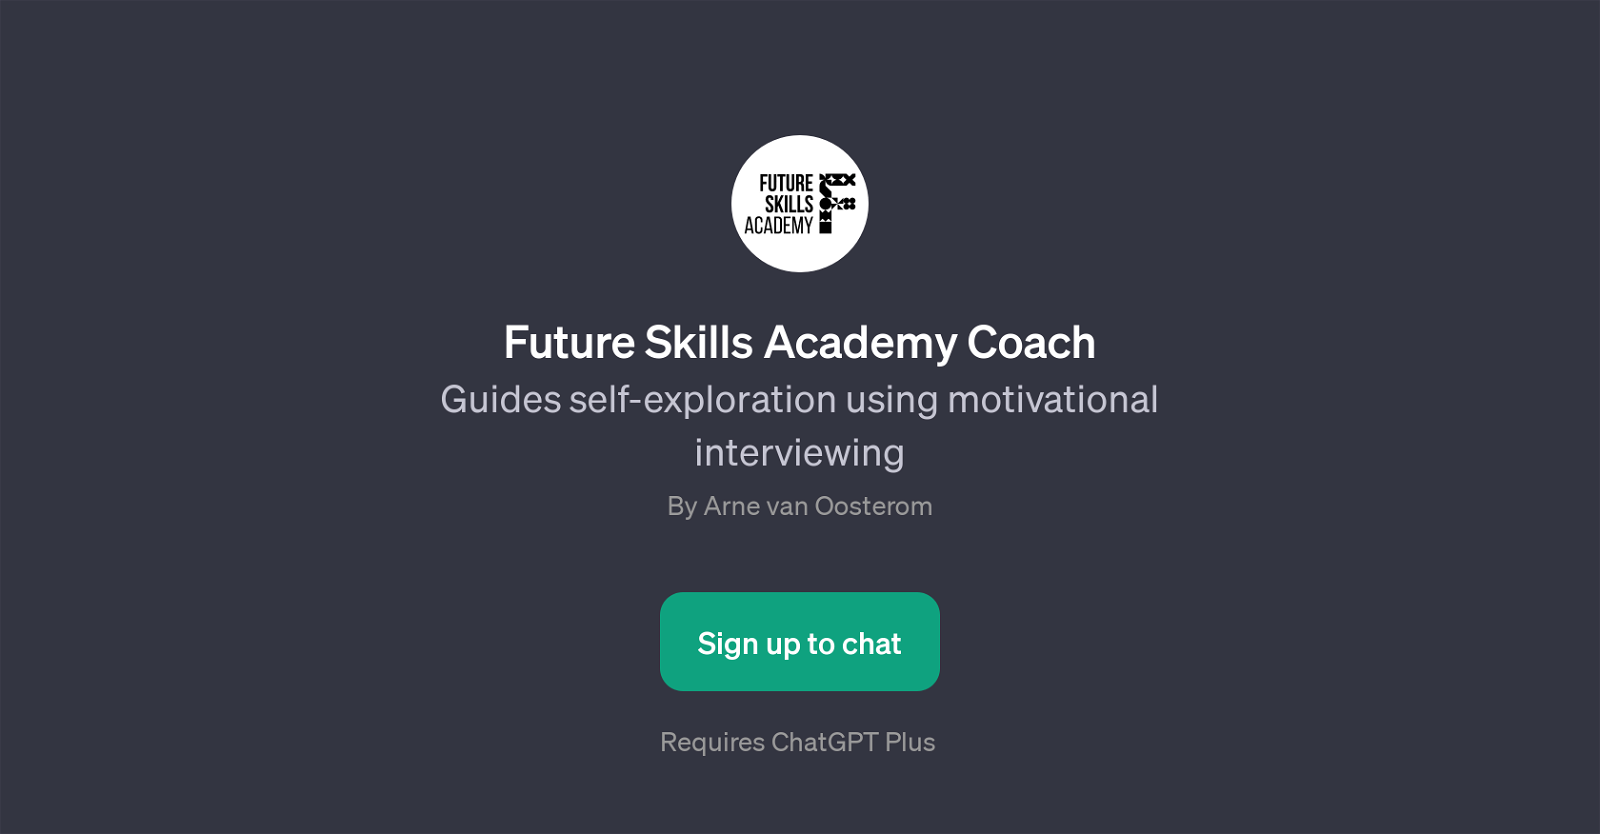 Future Skills Academy Coach website